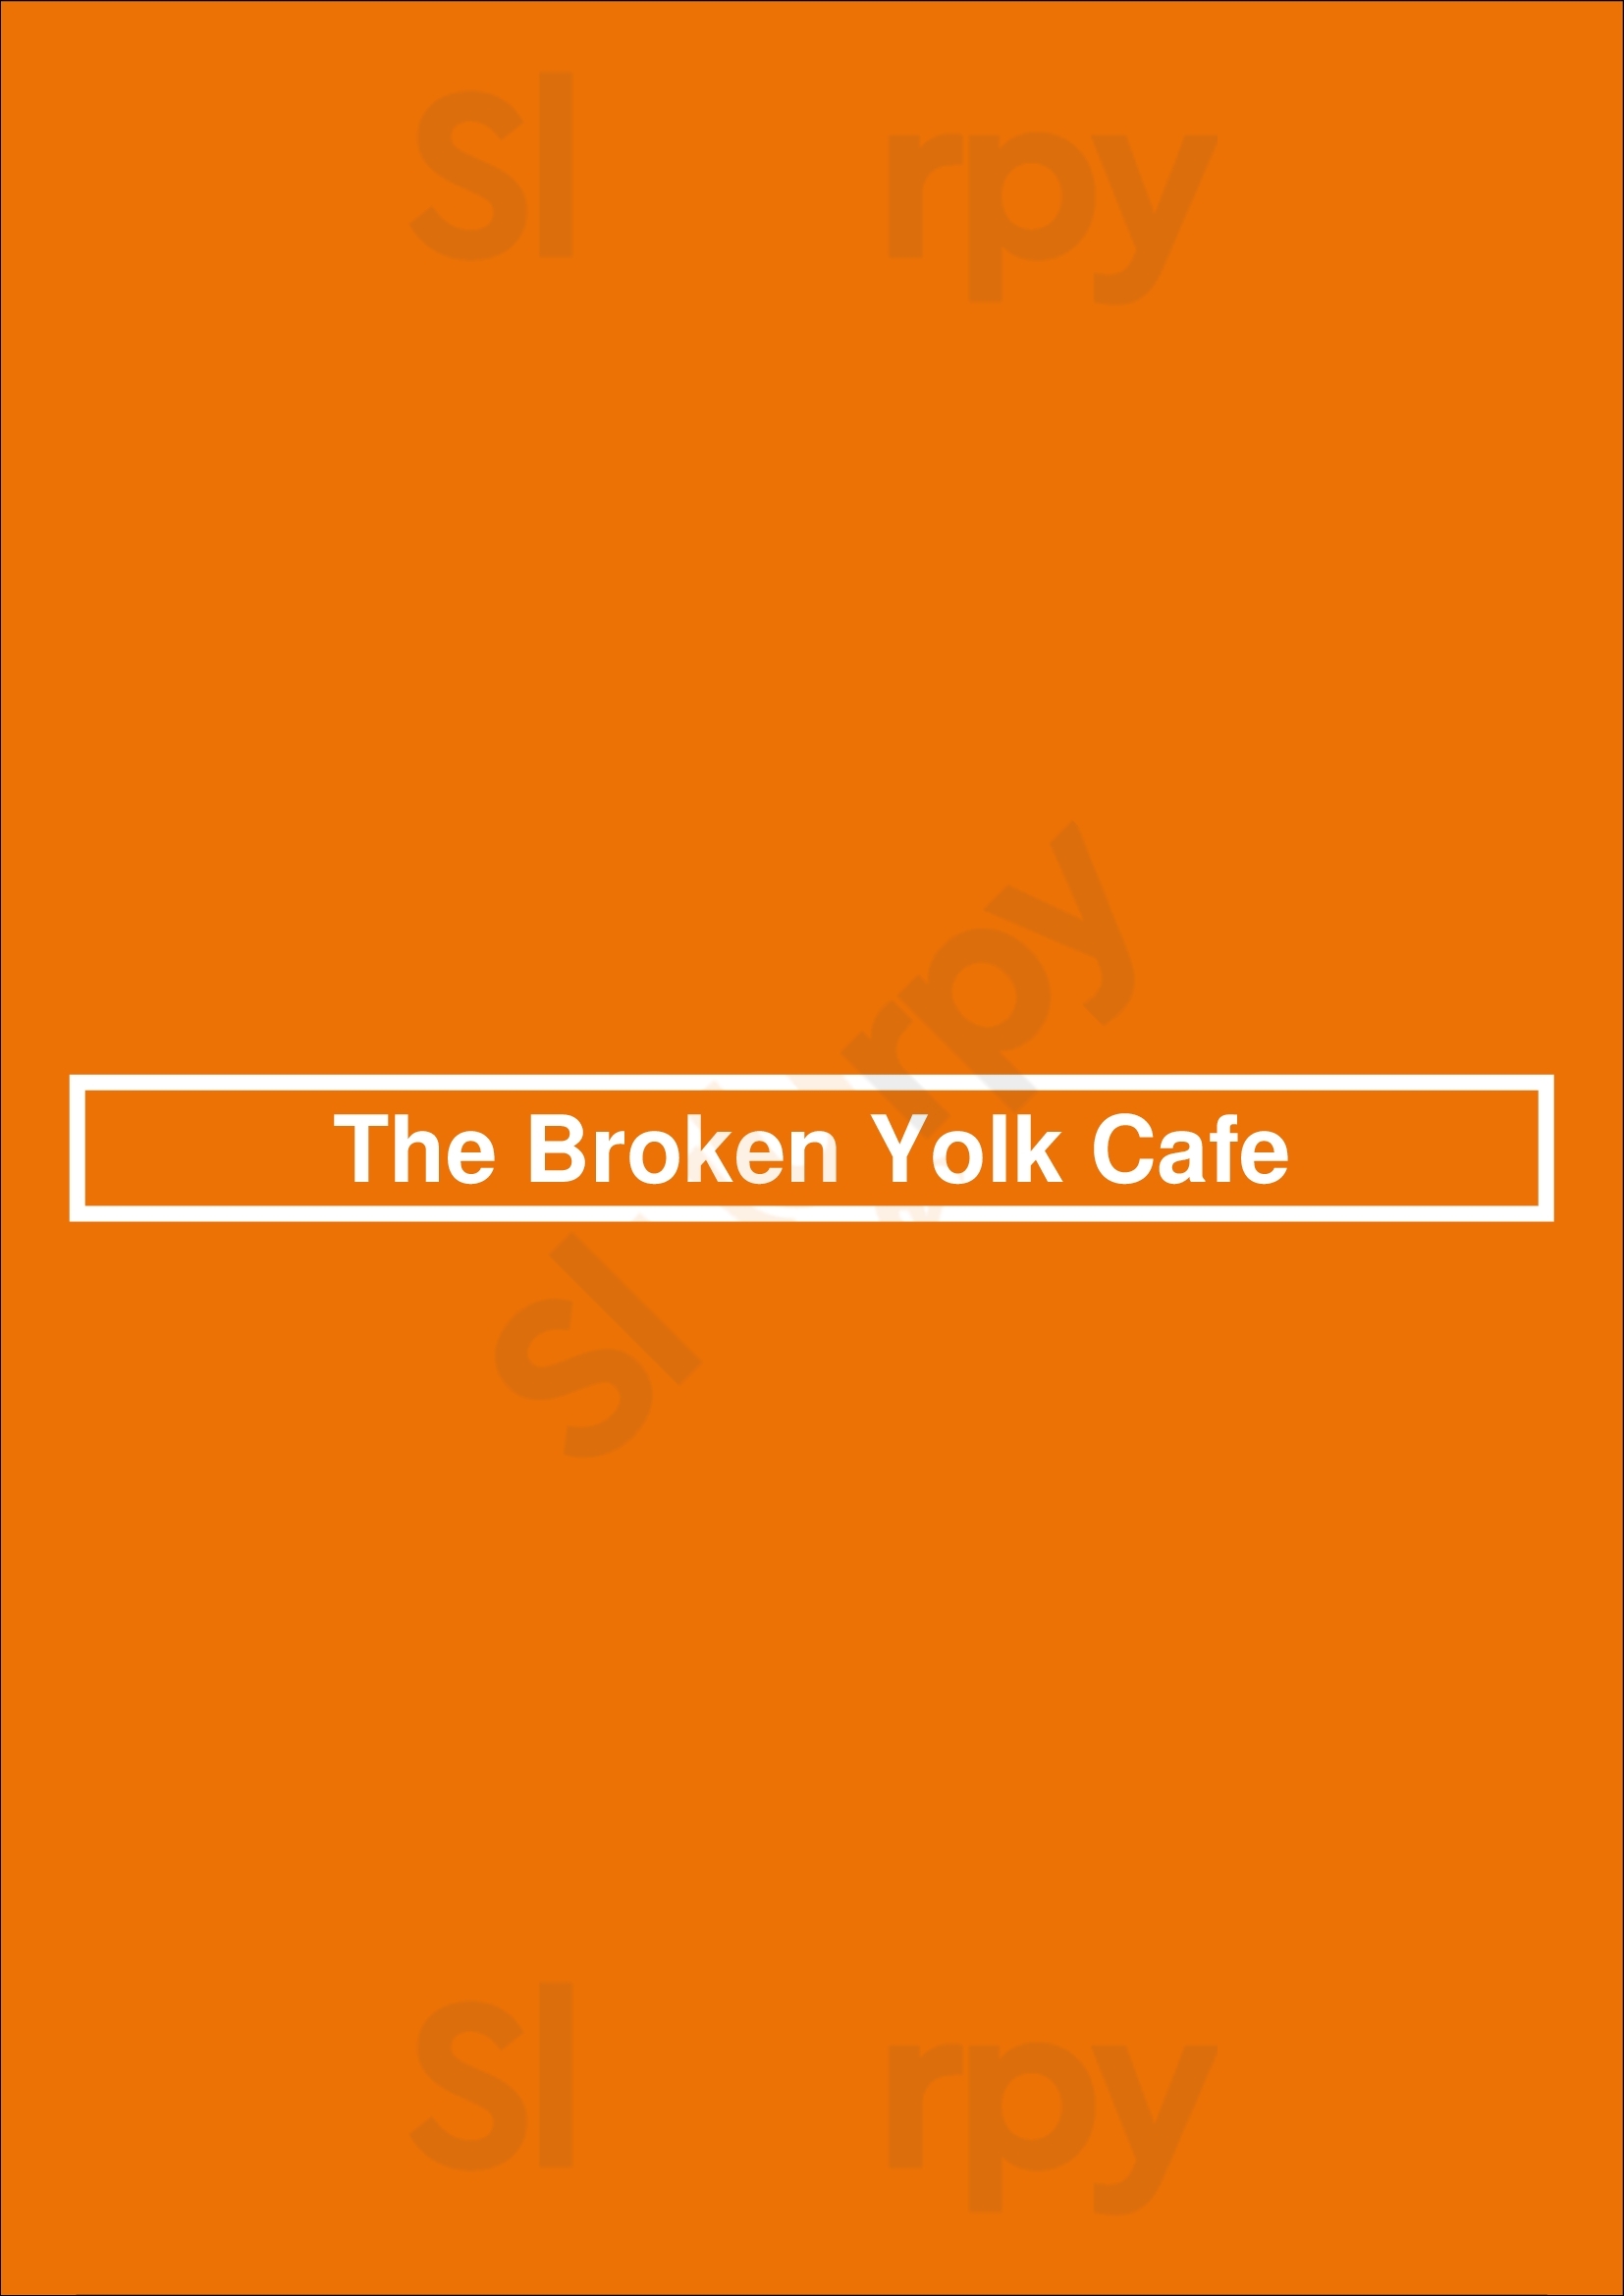 Broken Yolk Cafe Las Vegas Menu - 1